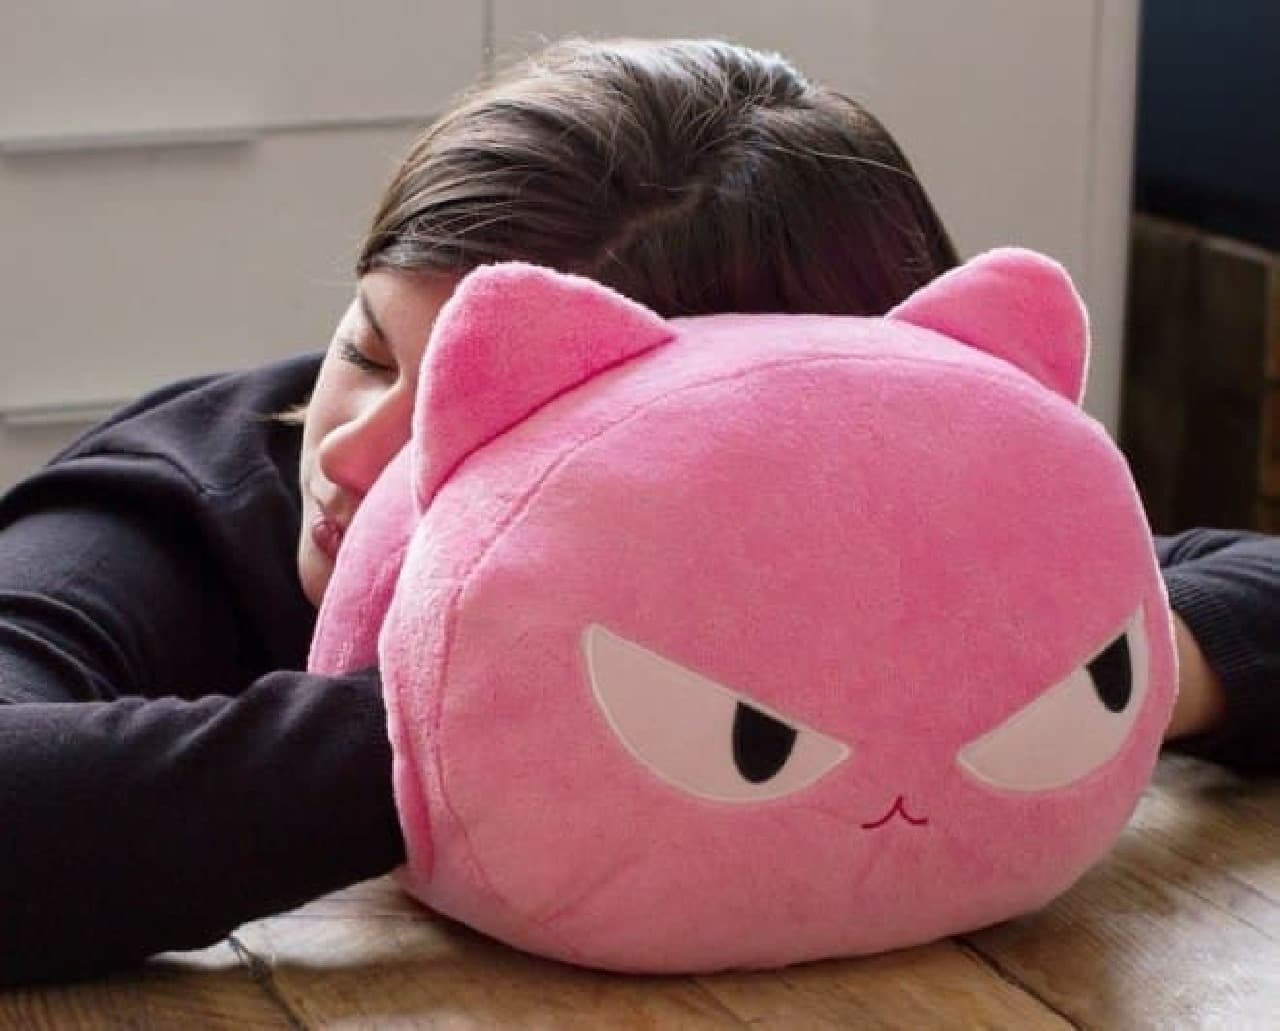 Pillow for nap "CAT NAP CUSHIONS"